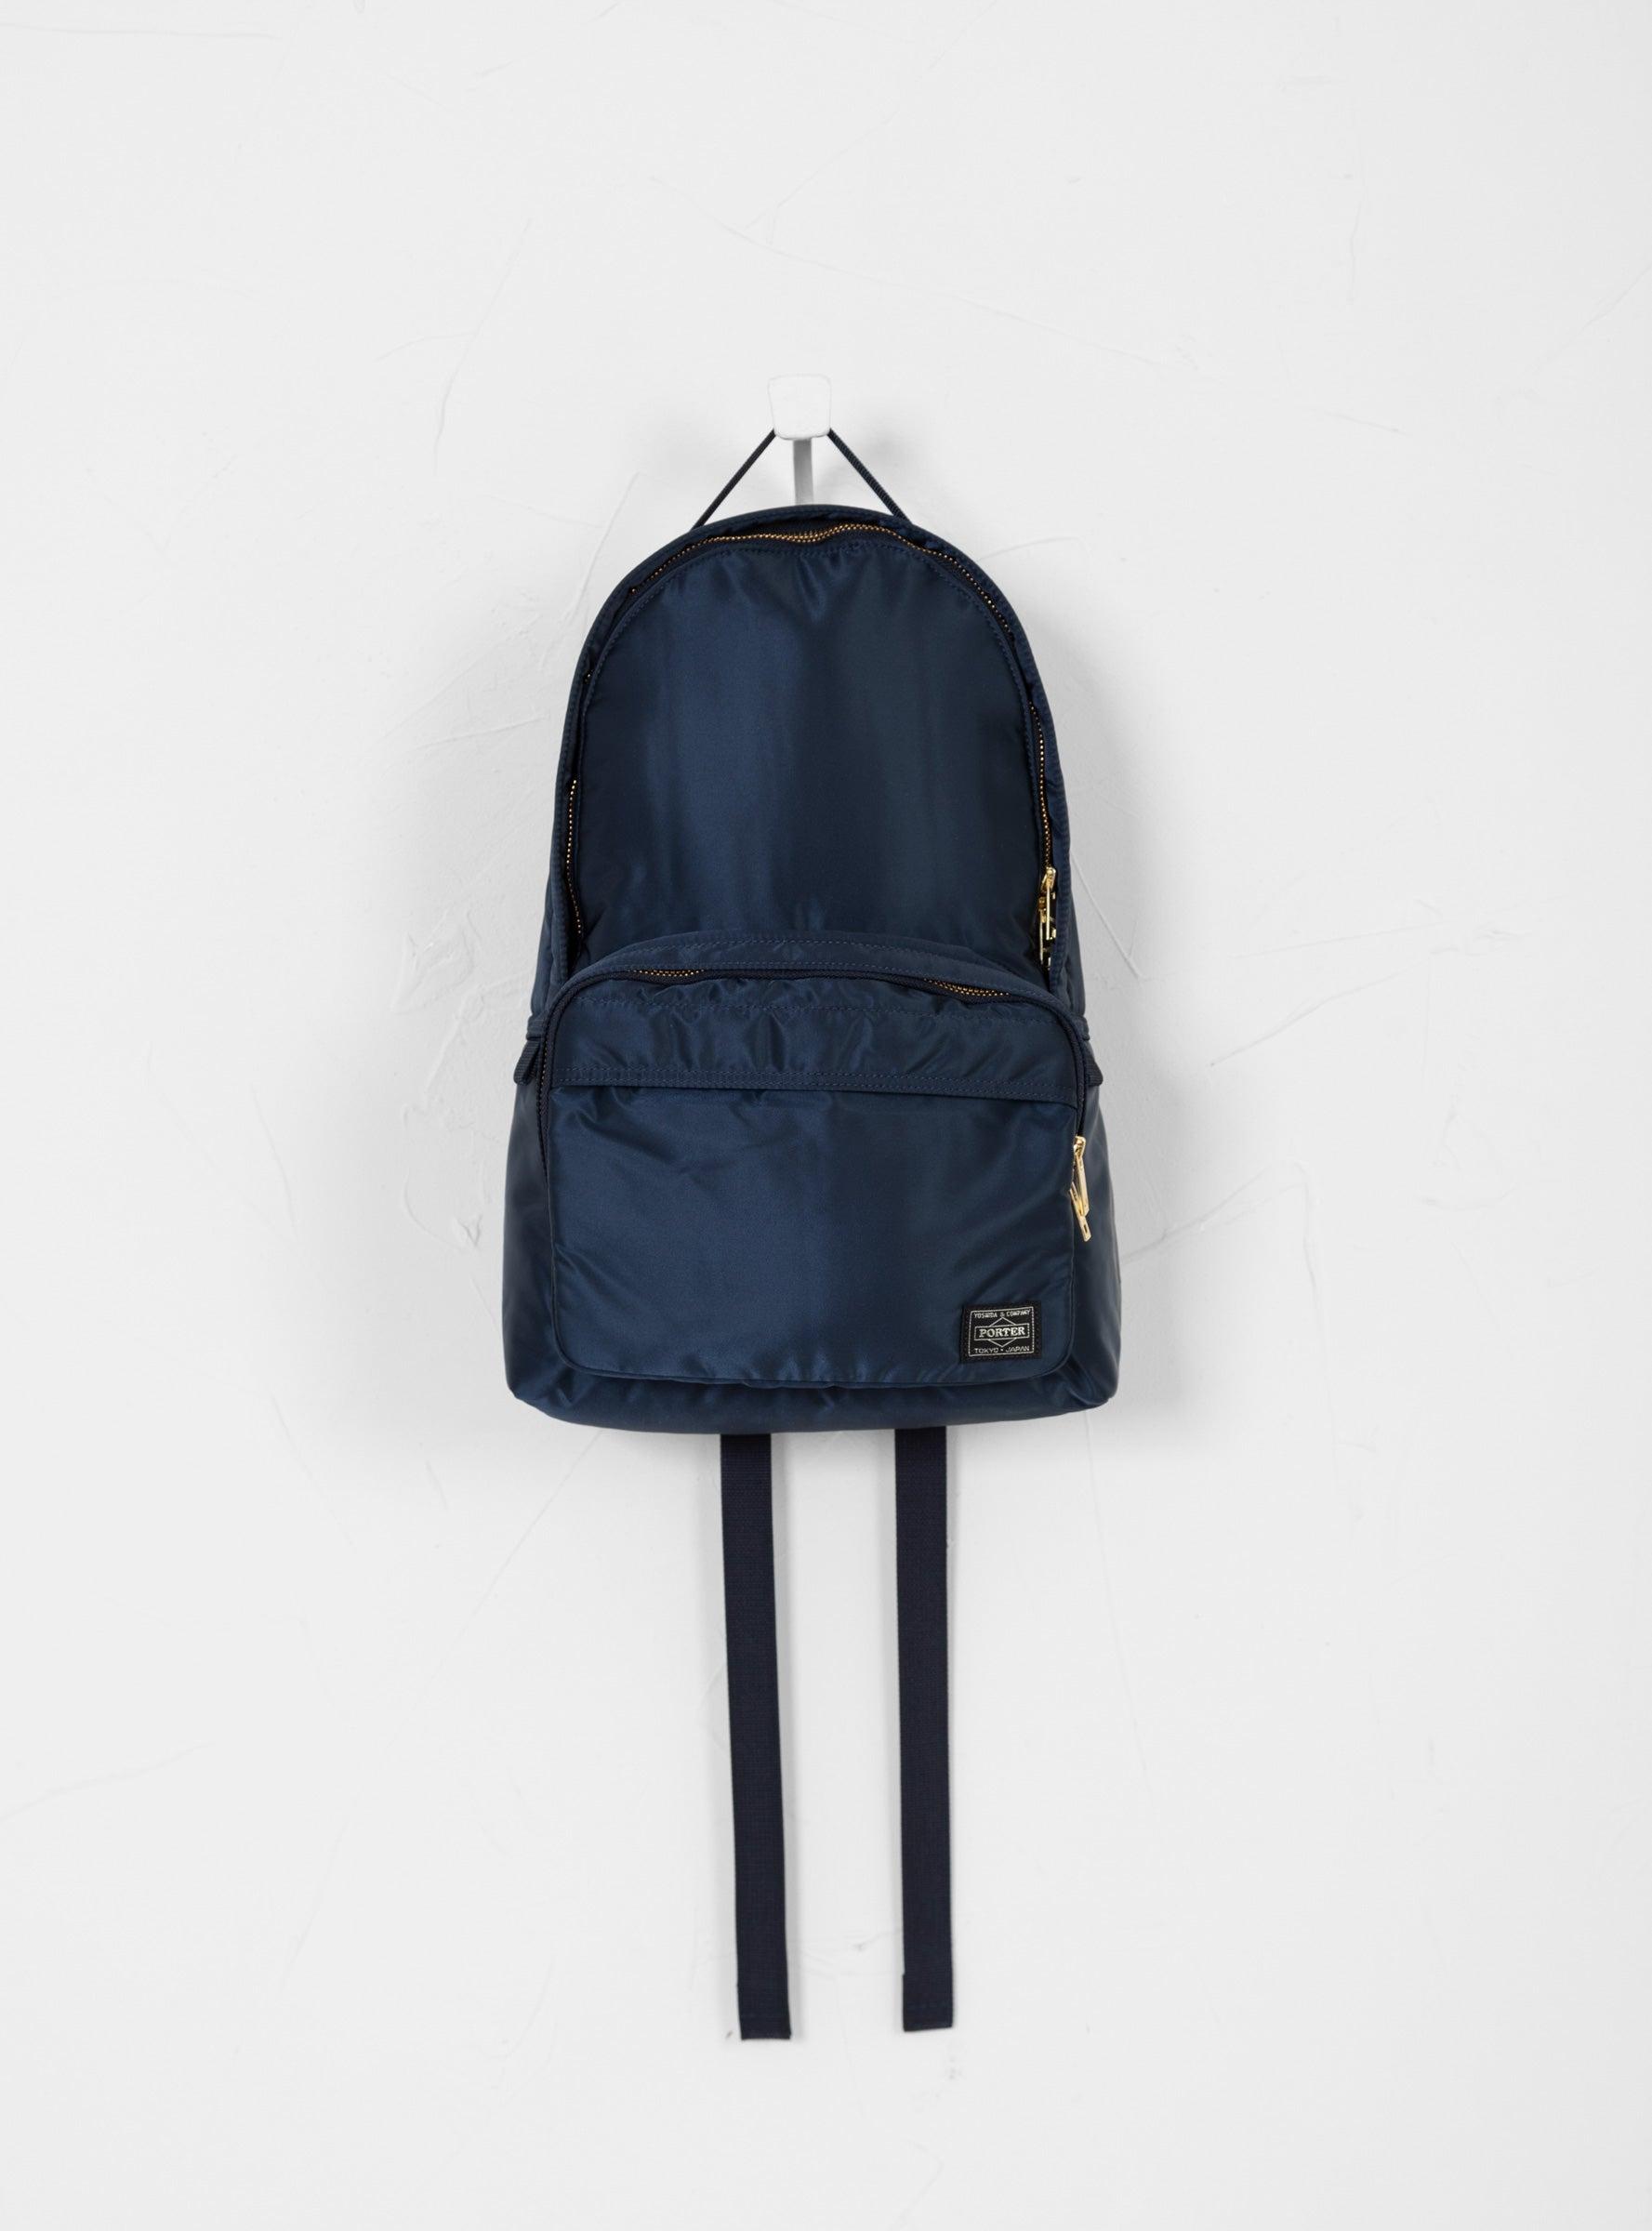 Porter-Yoshida and Co Tanker Day Backpack Medium Iron Blue for 